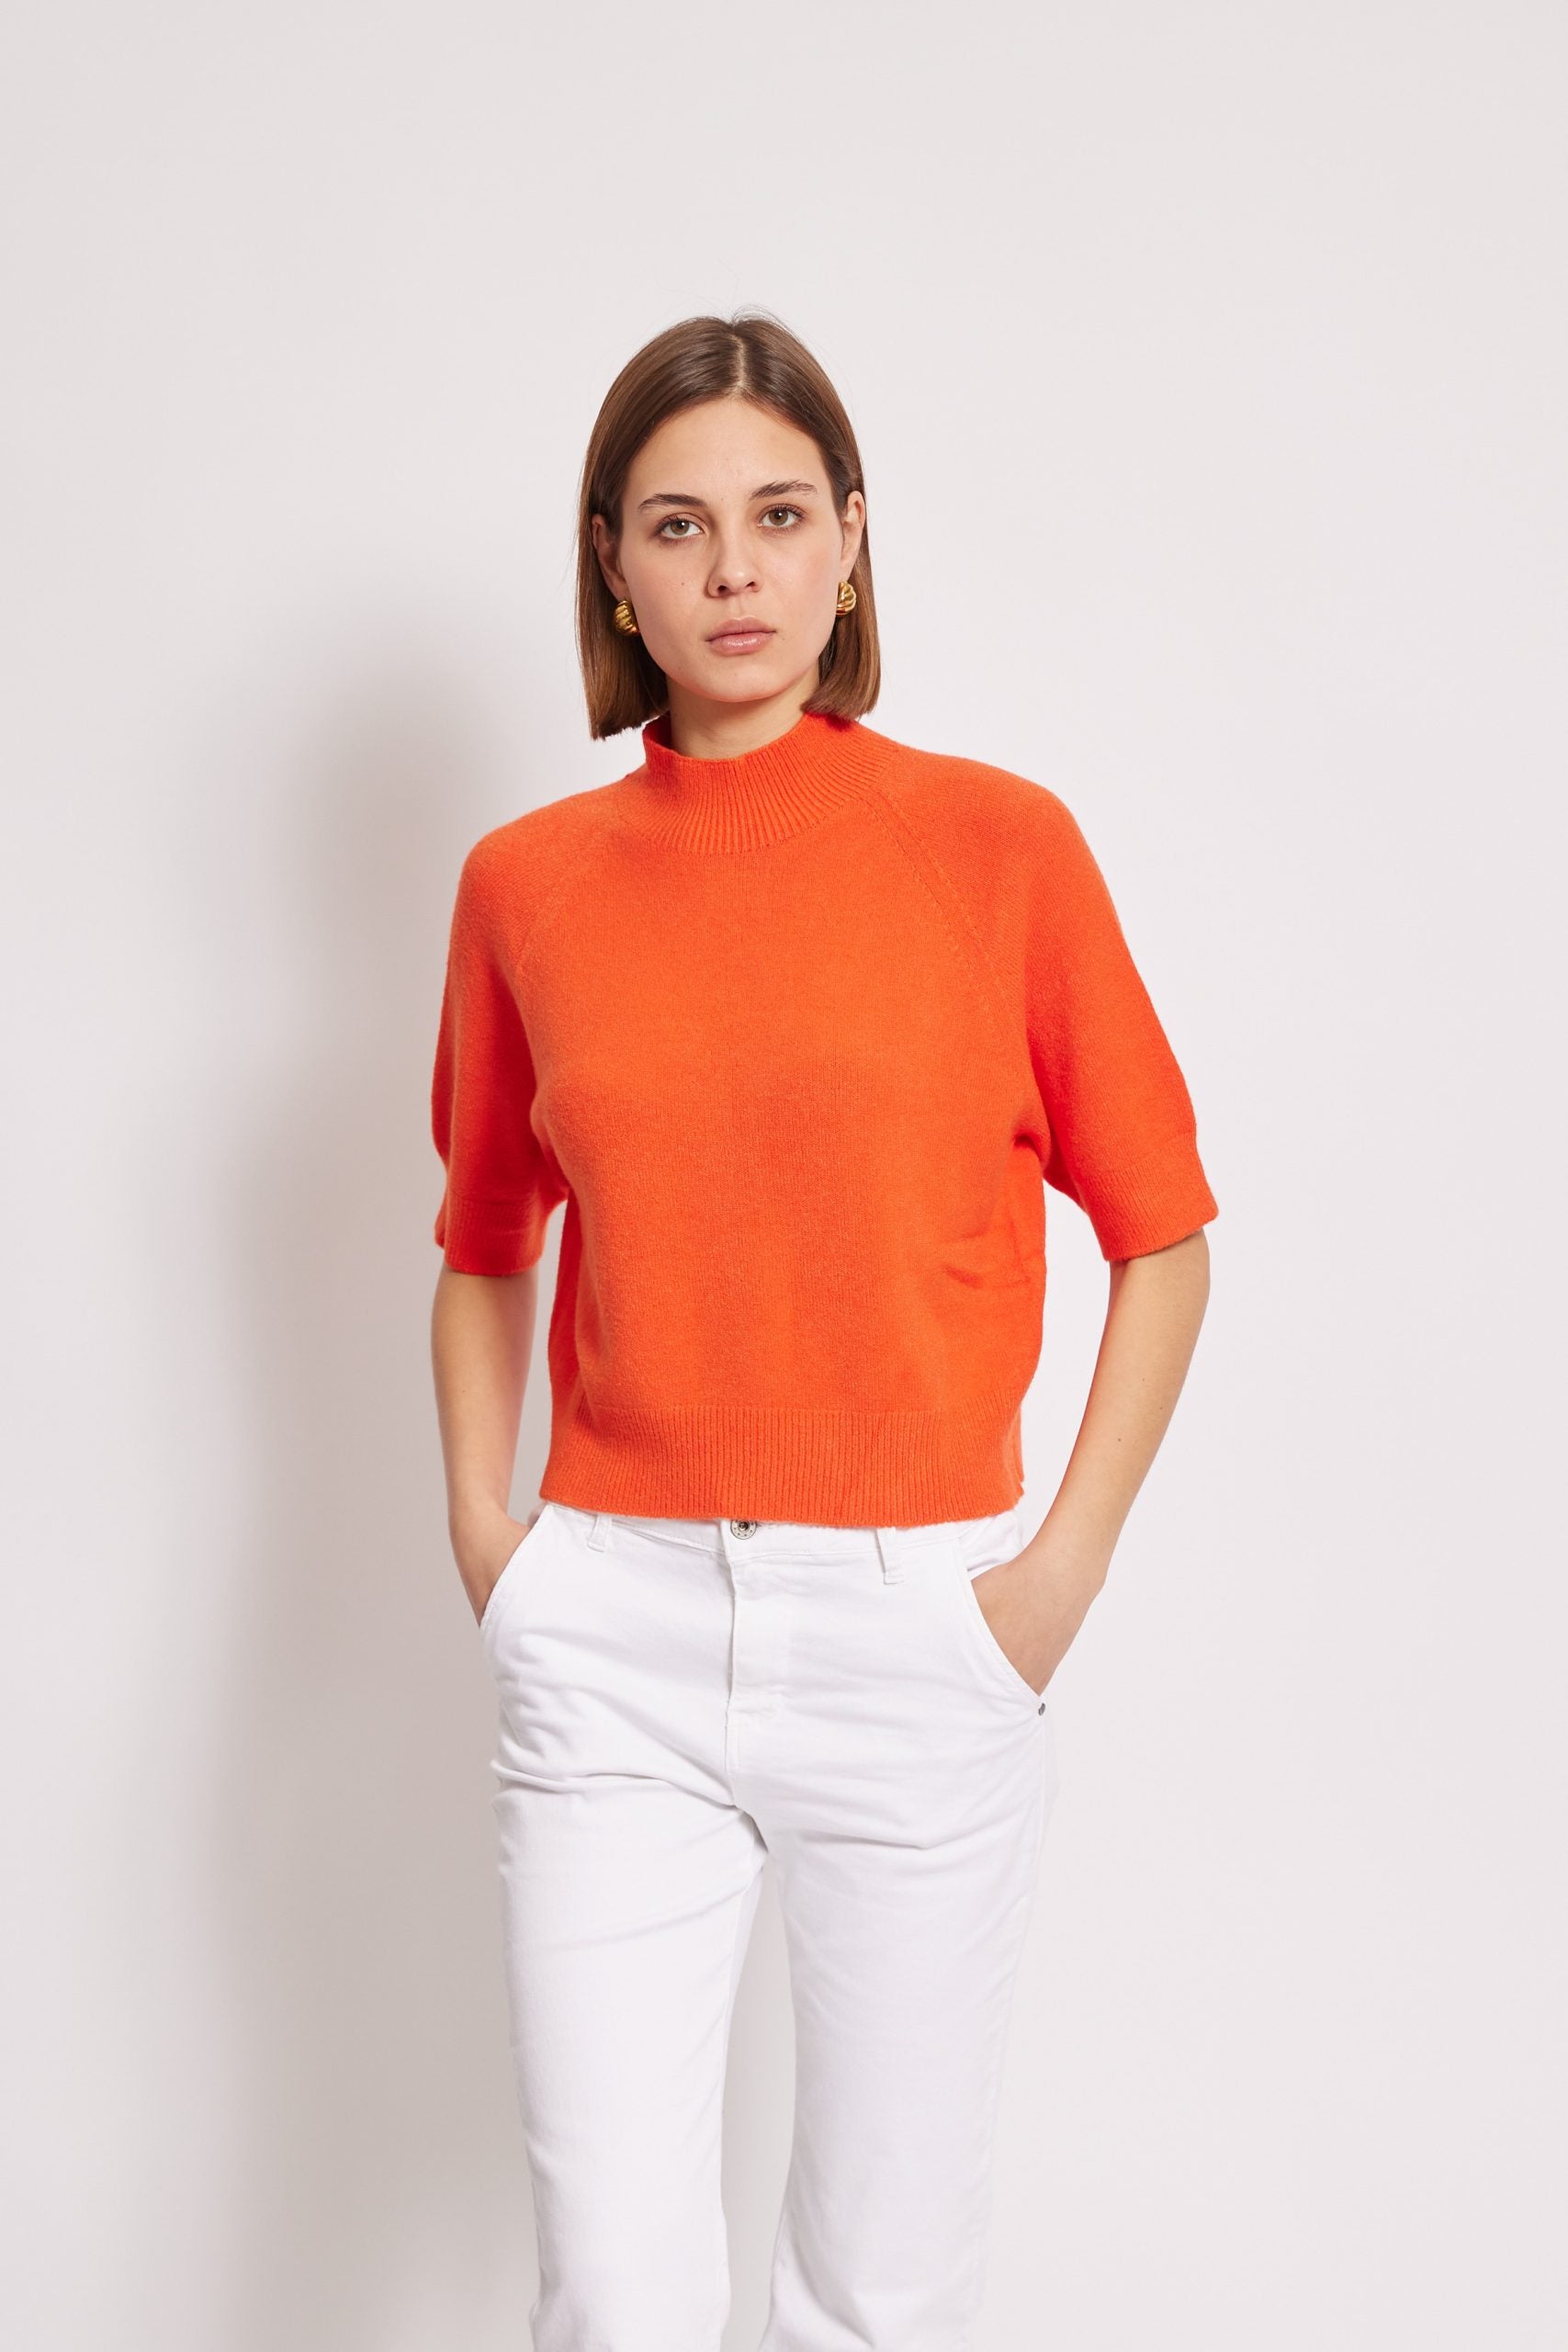 CHLOE Short Sleeve Turtle Neck Sweater ~ Orange, Pink, Cream